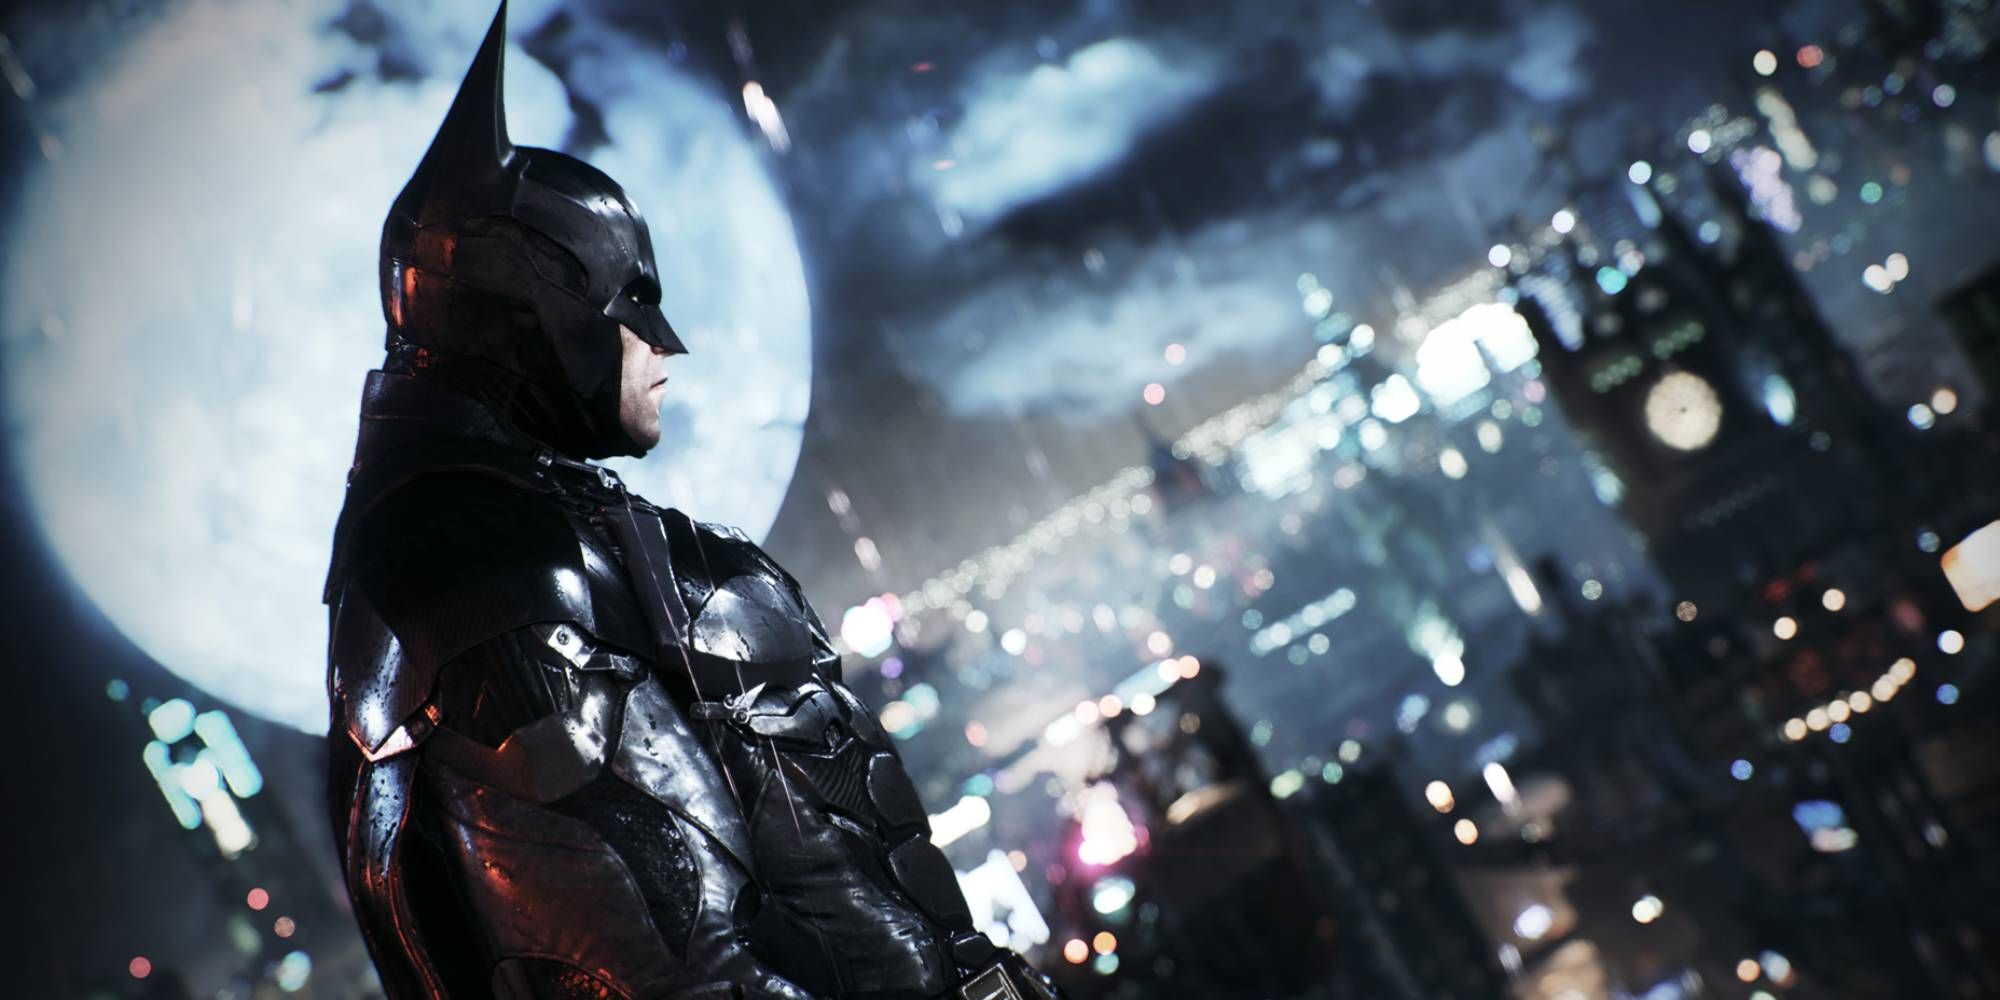 Batman Arkham Knight overlooks the city of Gotham on a rainy dark night